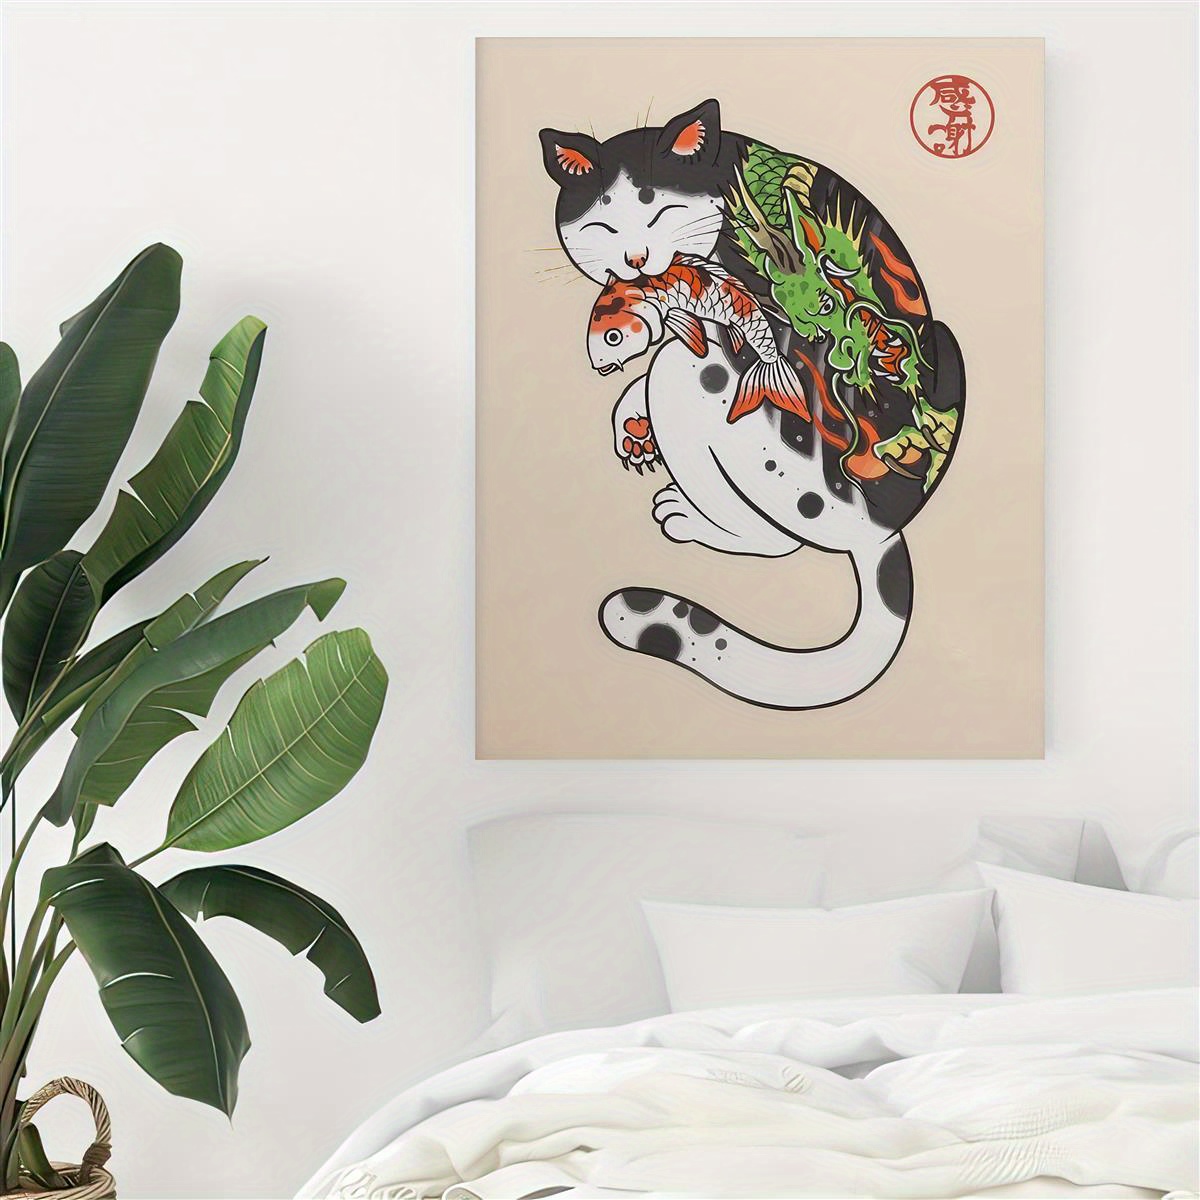 Wall sticker Katze Poster Katze Kunstdruck Katzenposter